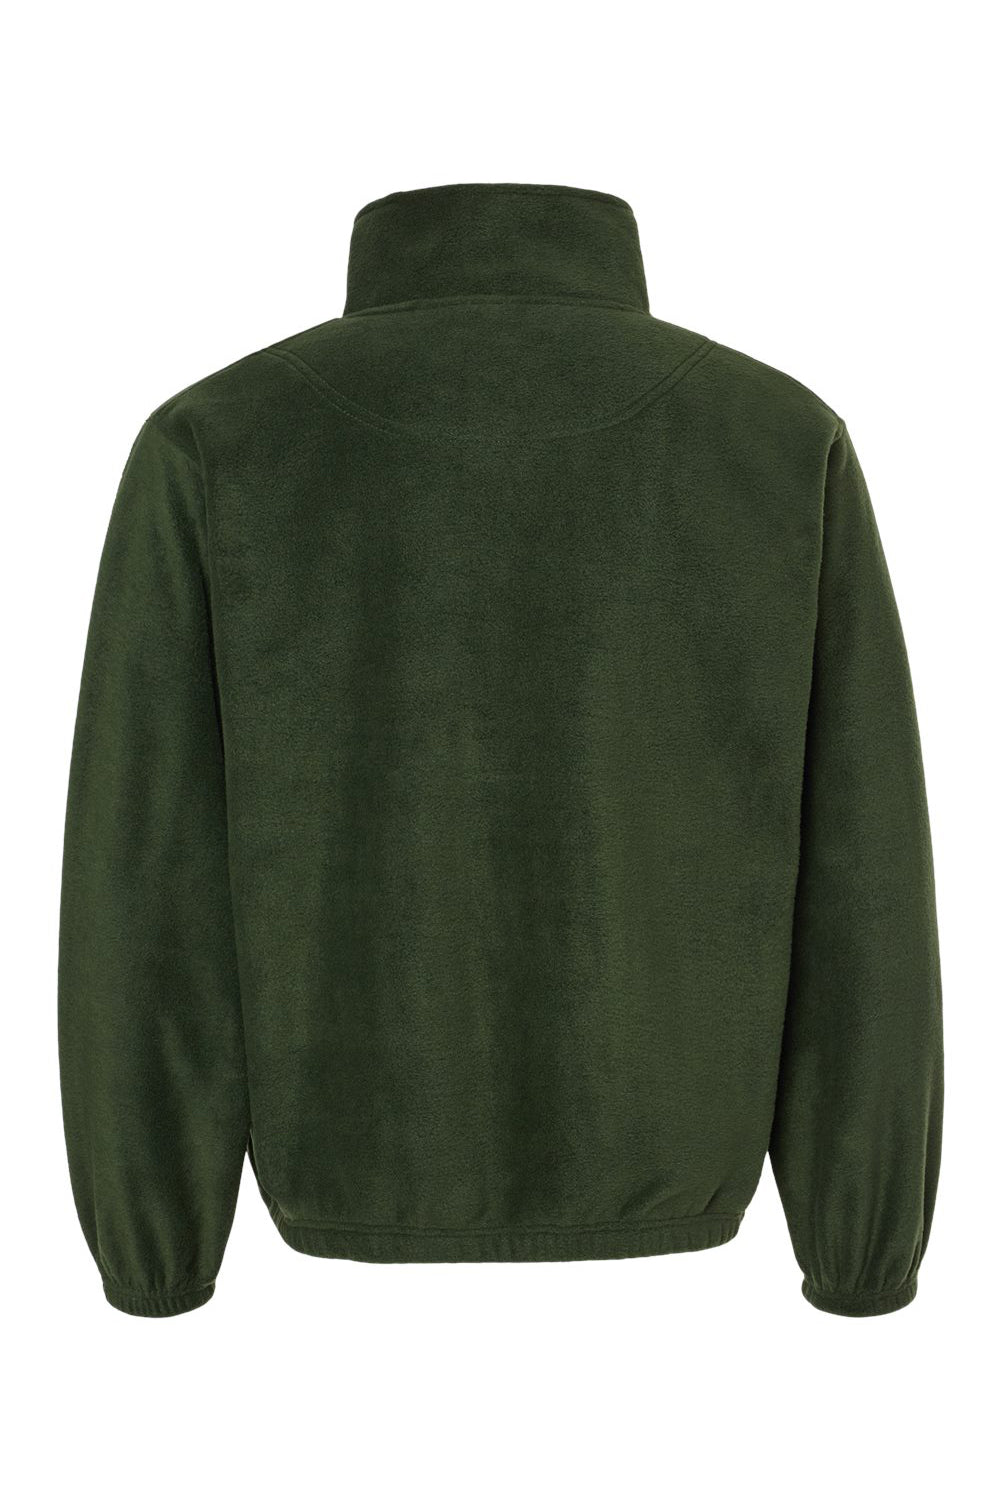 Burnside 3052 Mens Polar Fleece 1/4 Zip Sweatshirt Army Green Flat Back